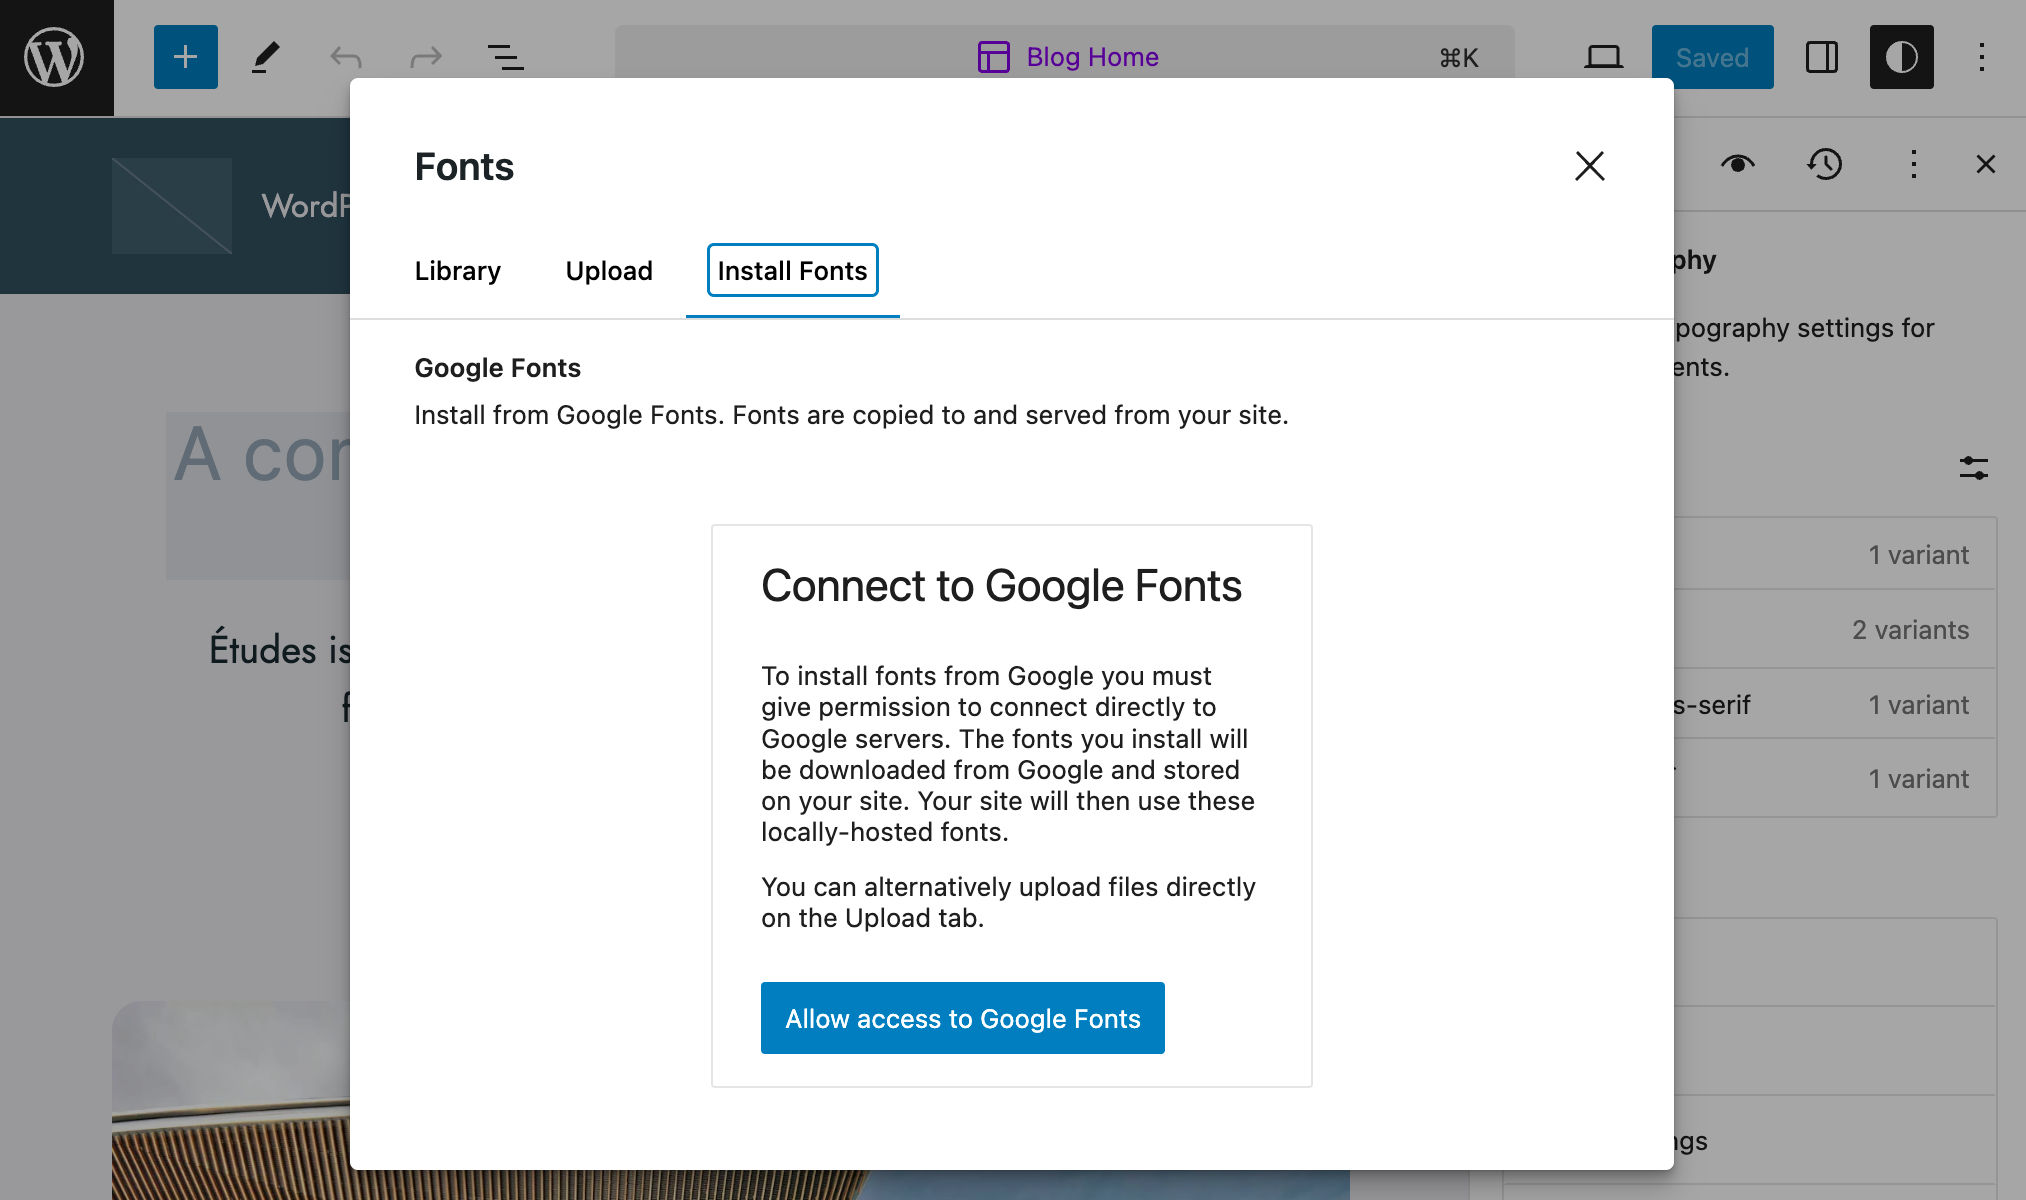 「Install Fonts」タブからGoogle Fontsに接続可能